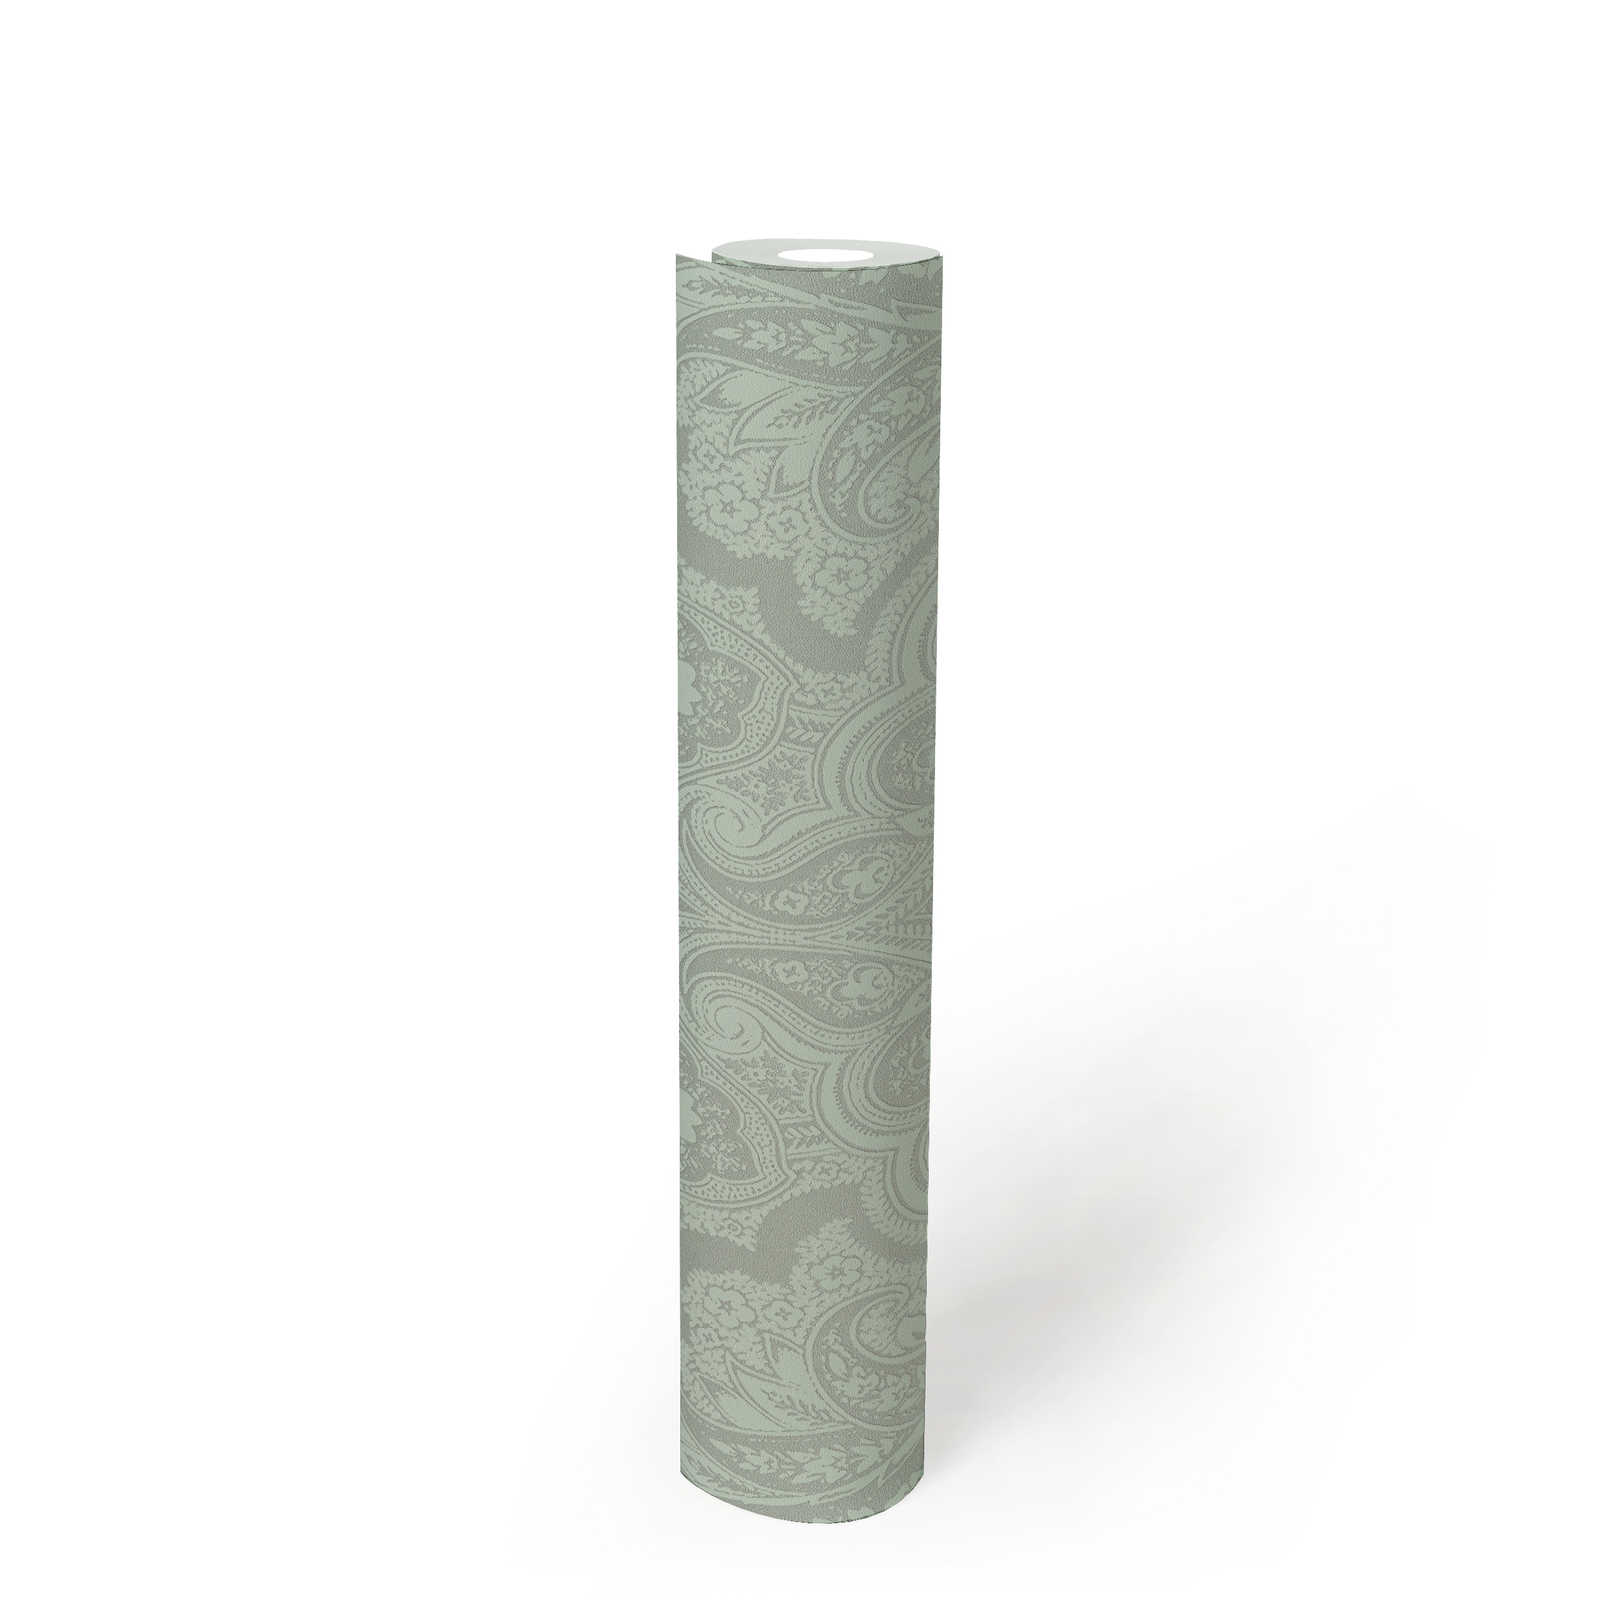             Papier peint boho vert menthe & gris argenté avec motif ornemental - métallique, vert
        